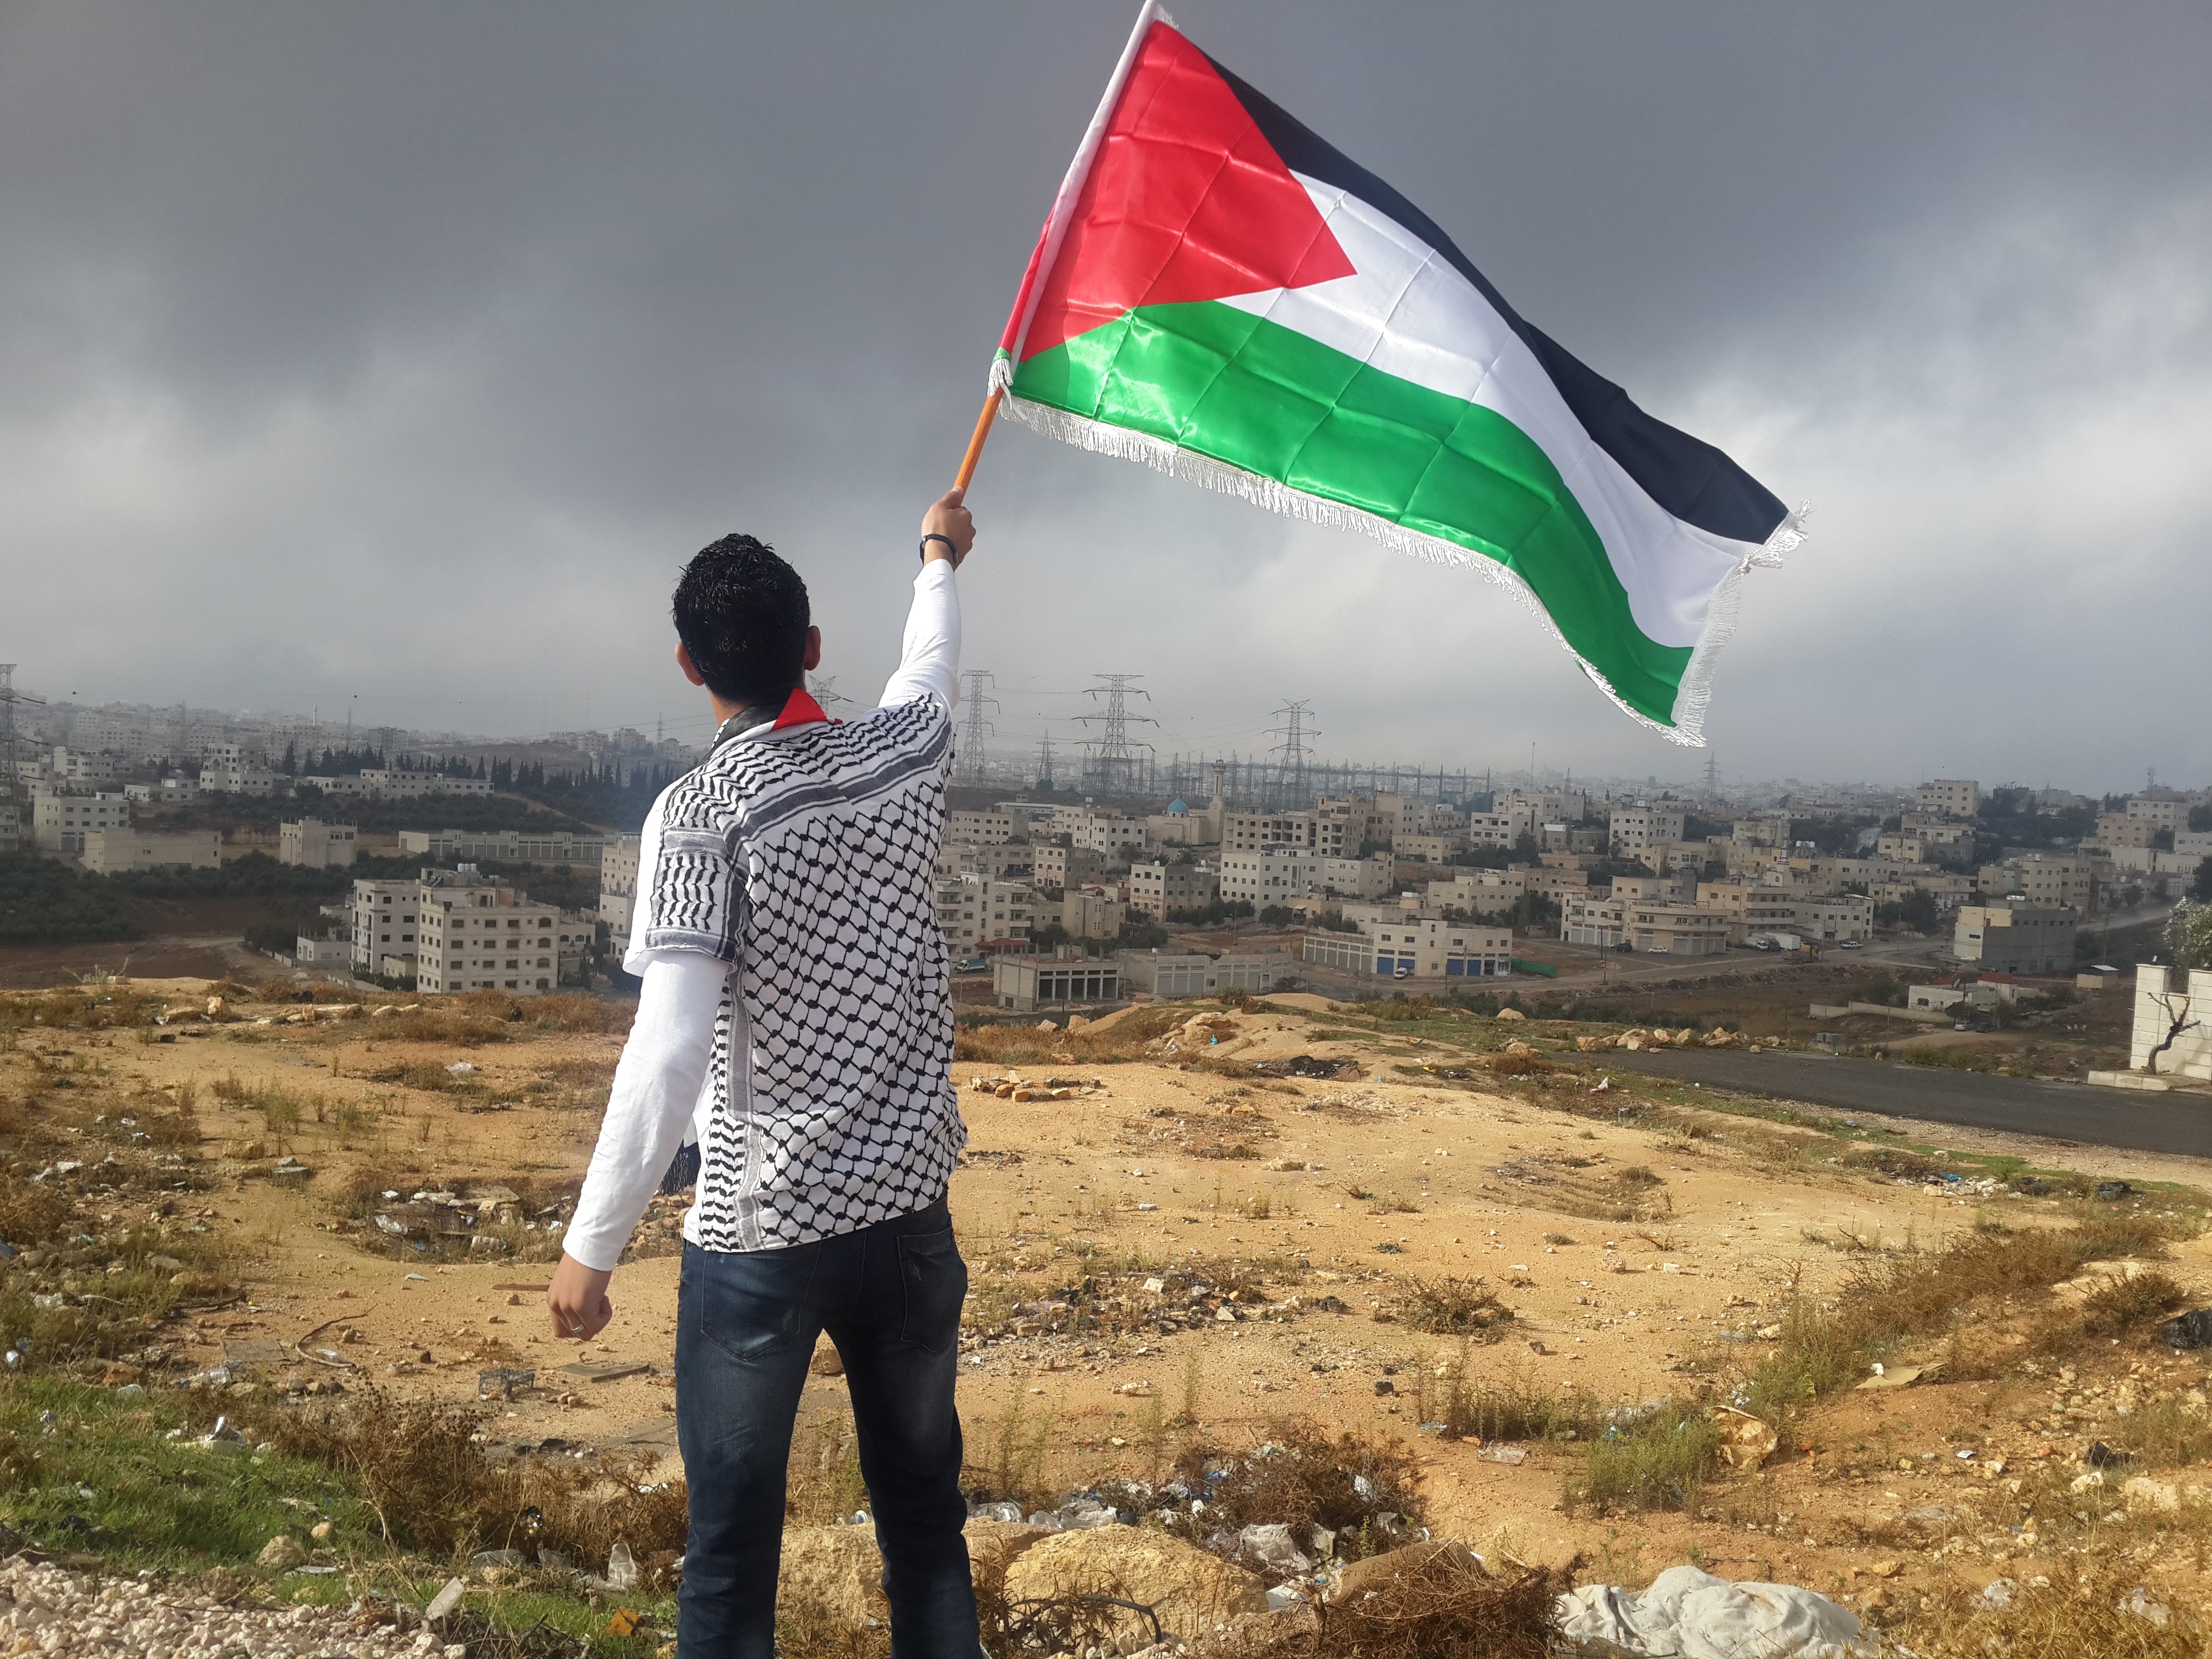 Man waving Palestine flag, showing the importance of international solidarity.